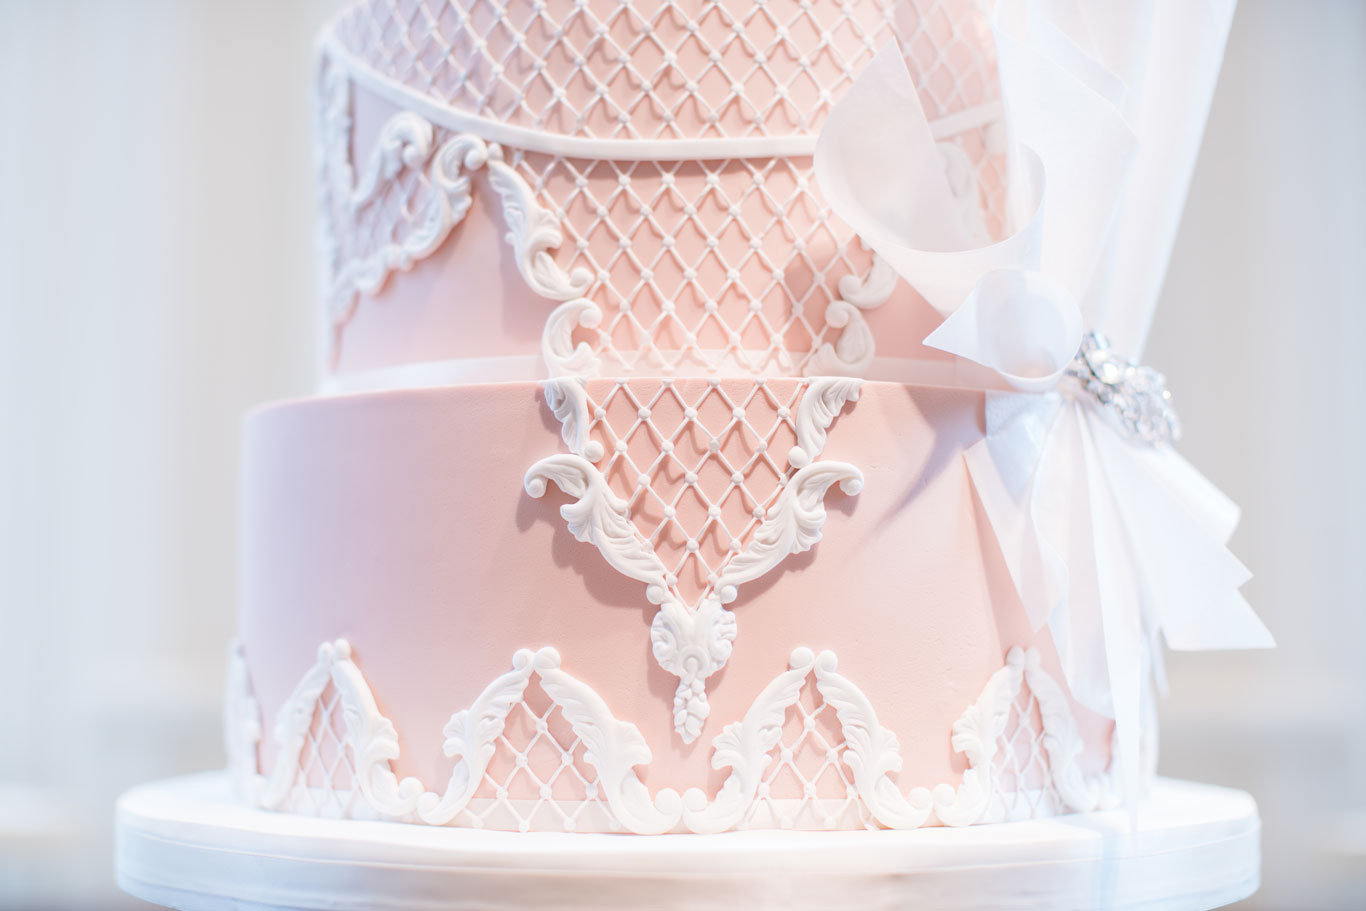 Luxury Wedding Cake Details by GC Couture for Oscar De La Renta